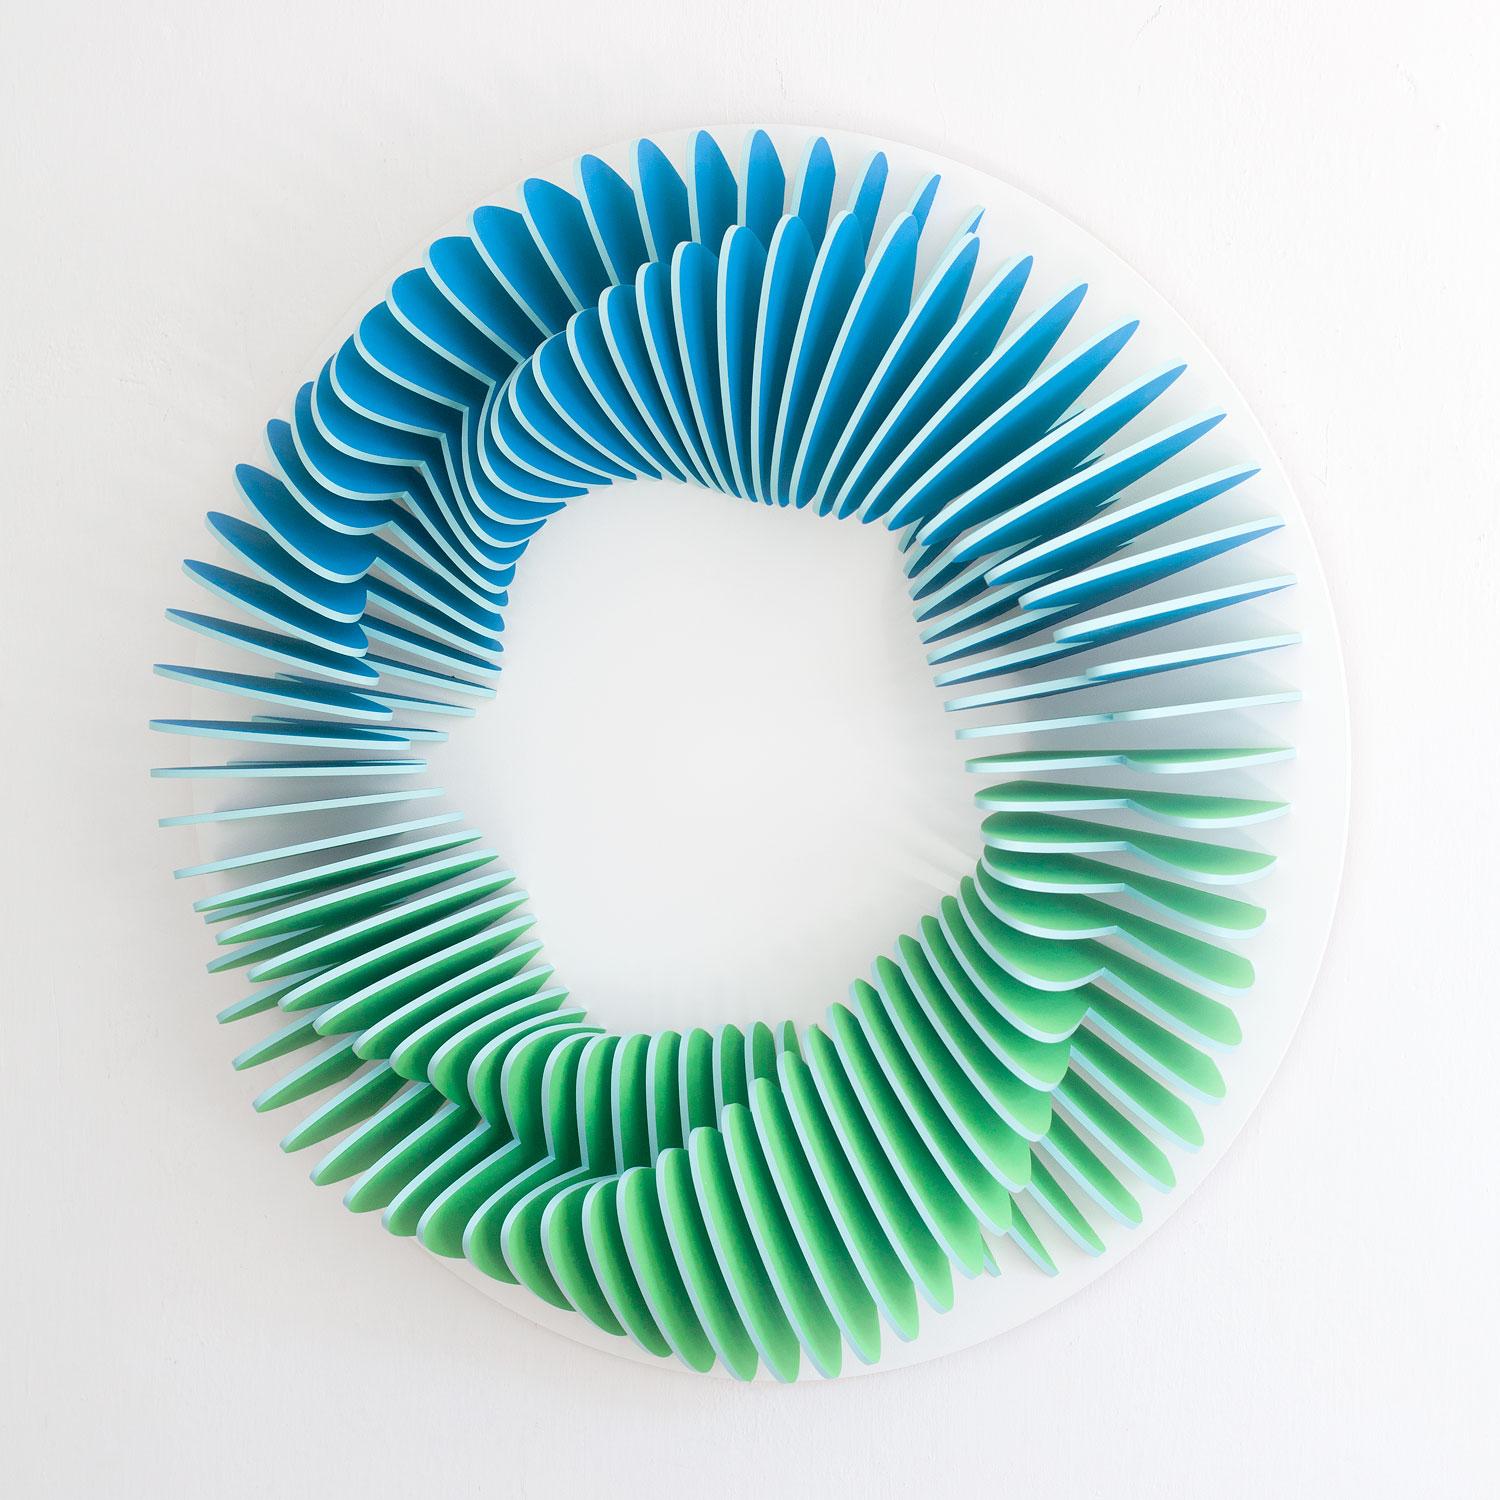 CC 102 - Blue green abstract geometric 3D wall circular sculpture